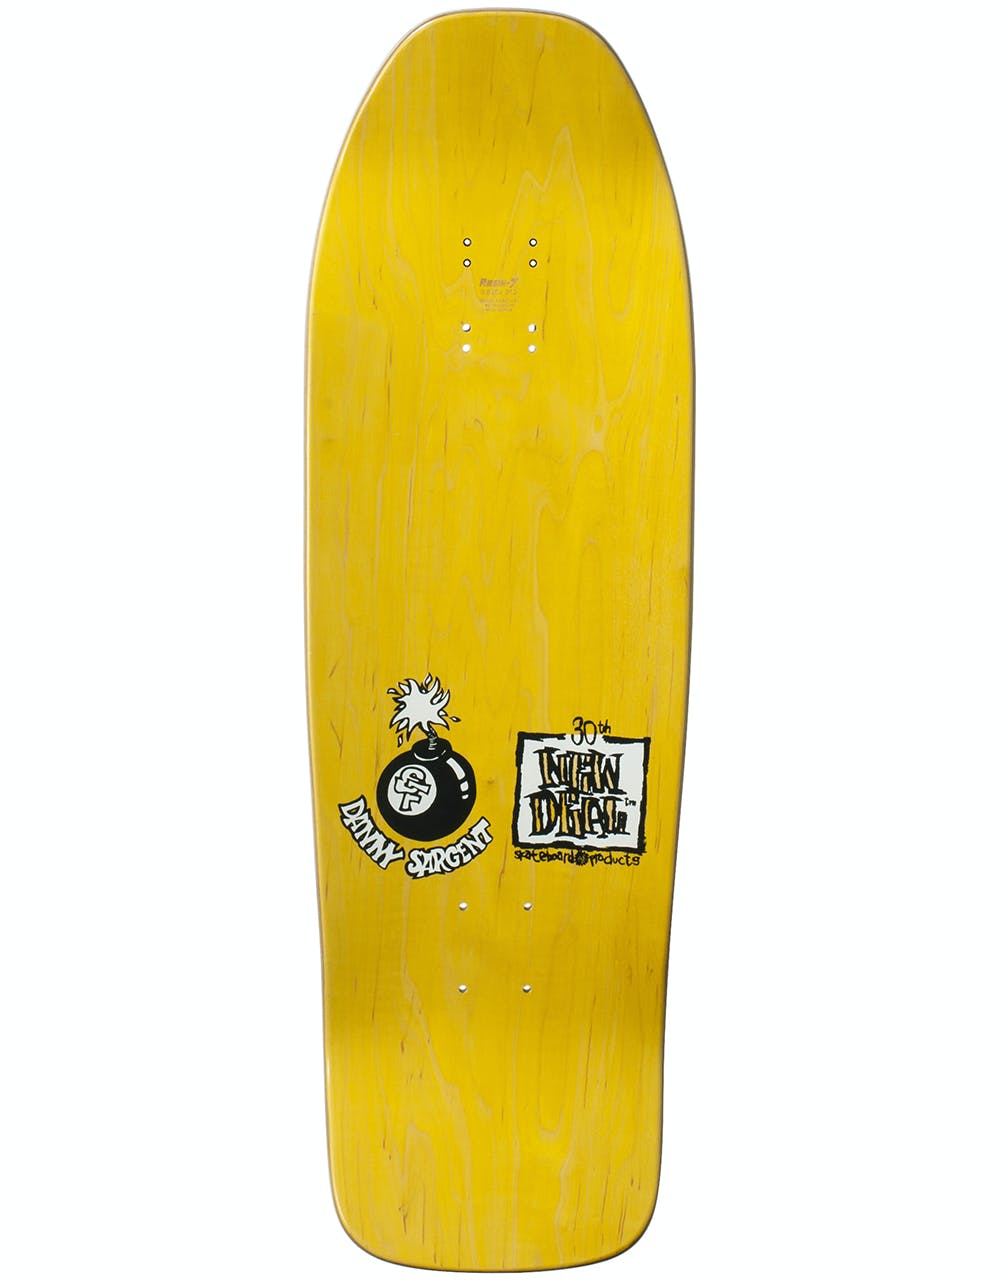 The New Deal Sargent Monkey Bomber SP Skateboard Deck - 9.625"